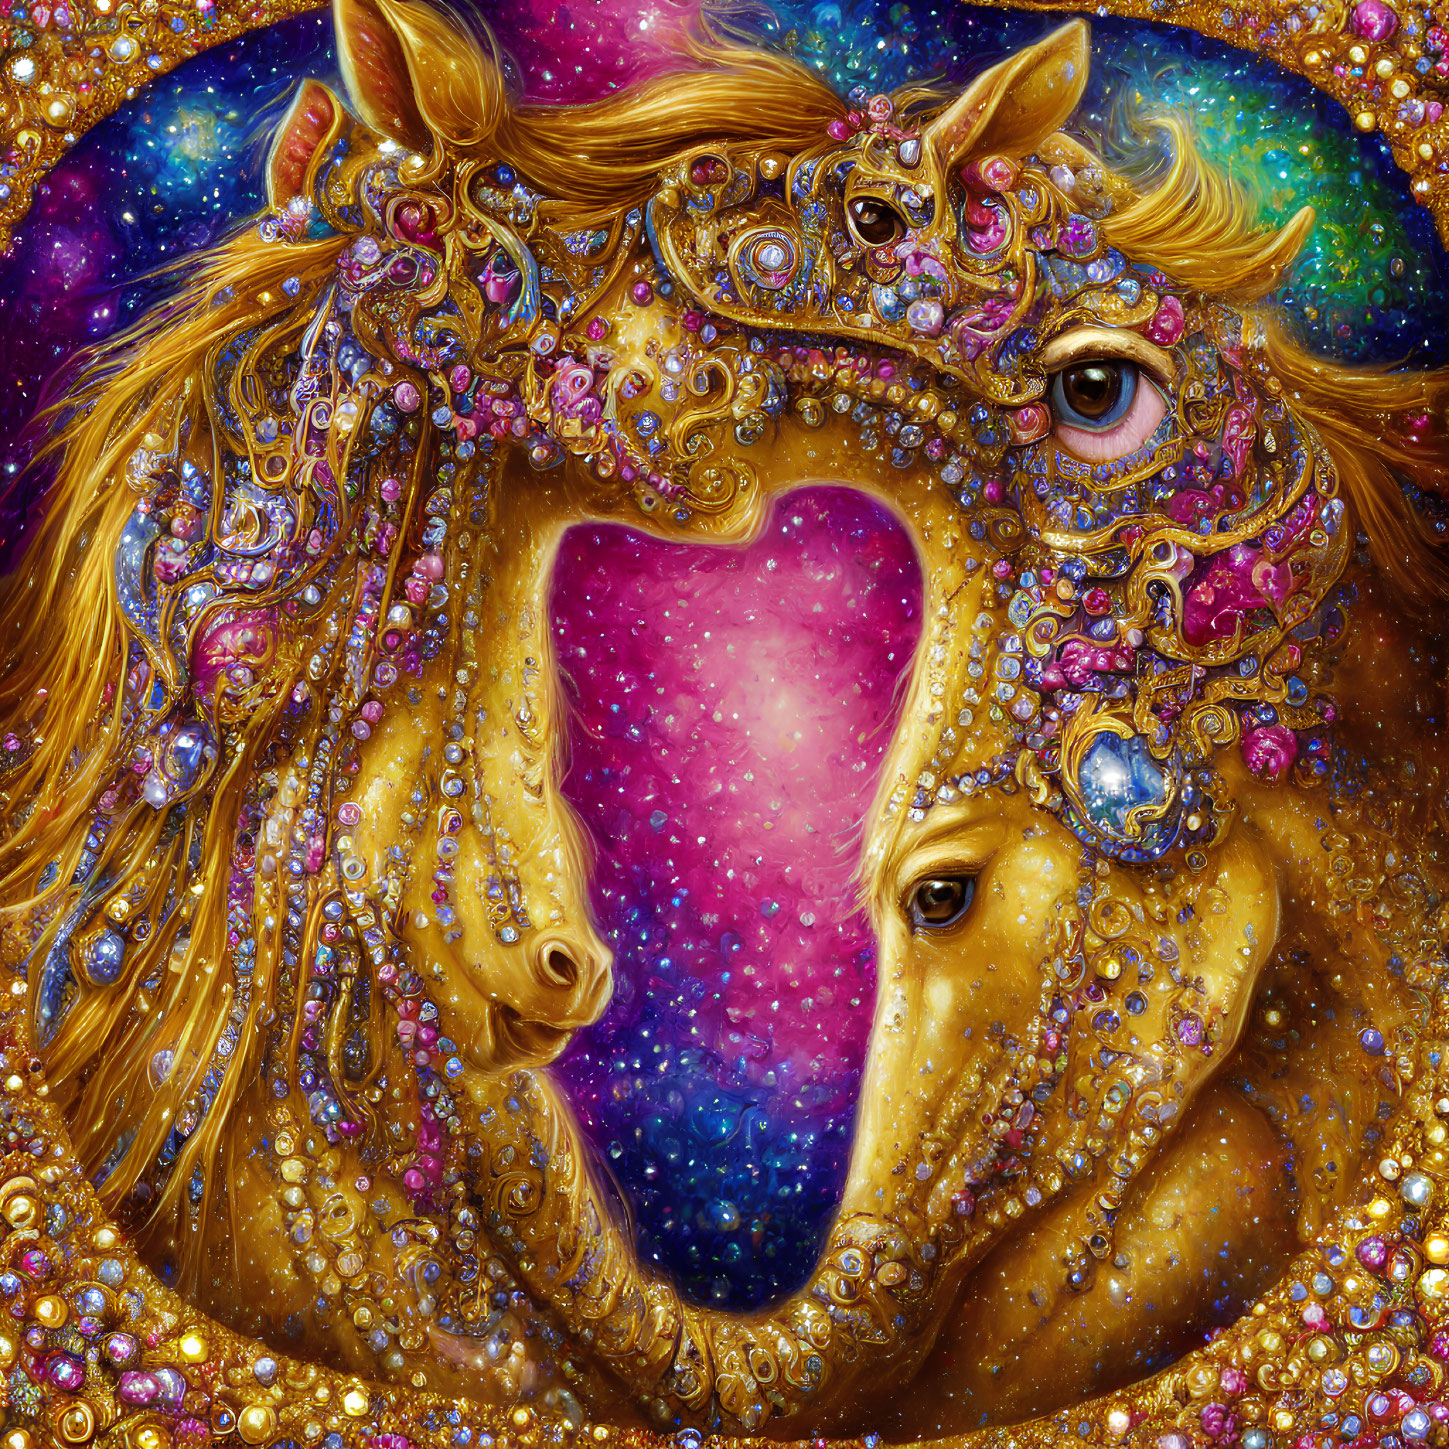 Vibrant digital artwork: Golden horses with cosmic backgrounds